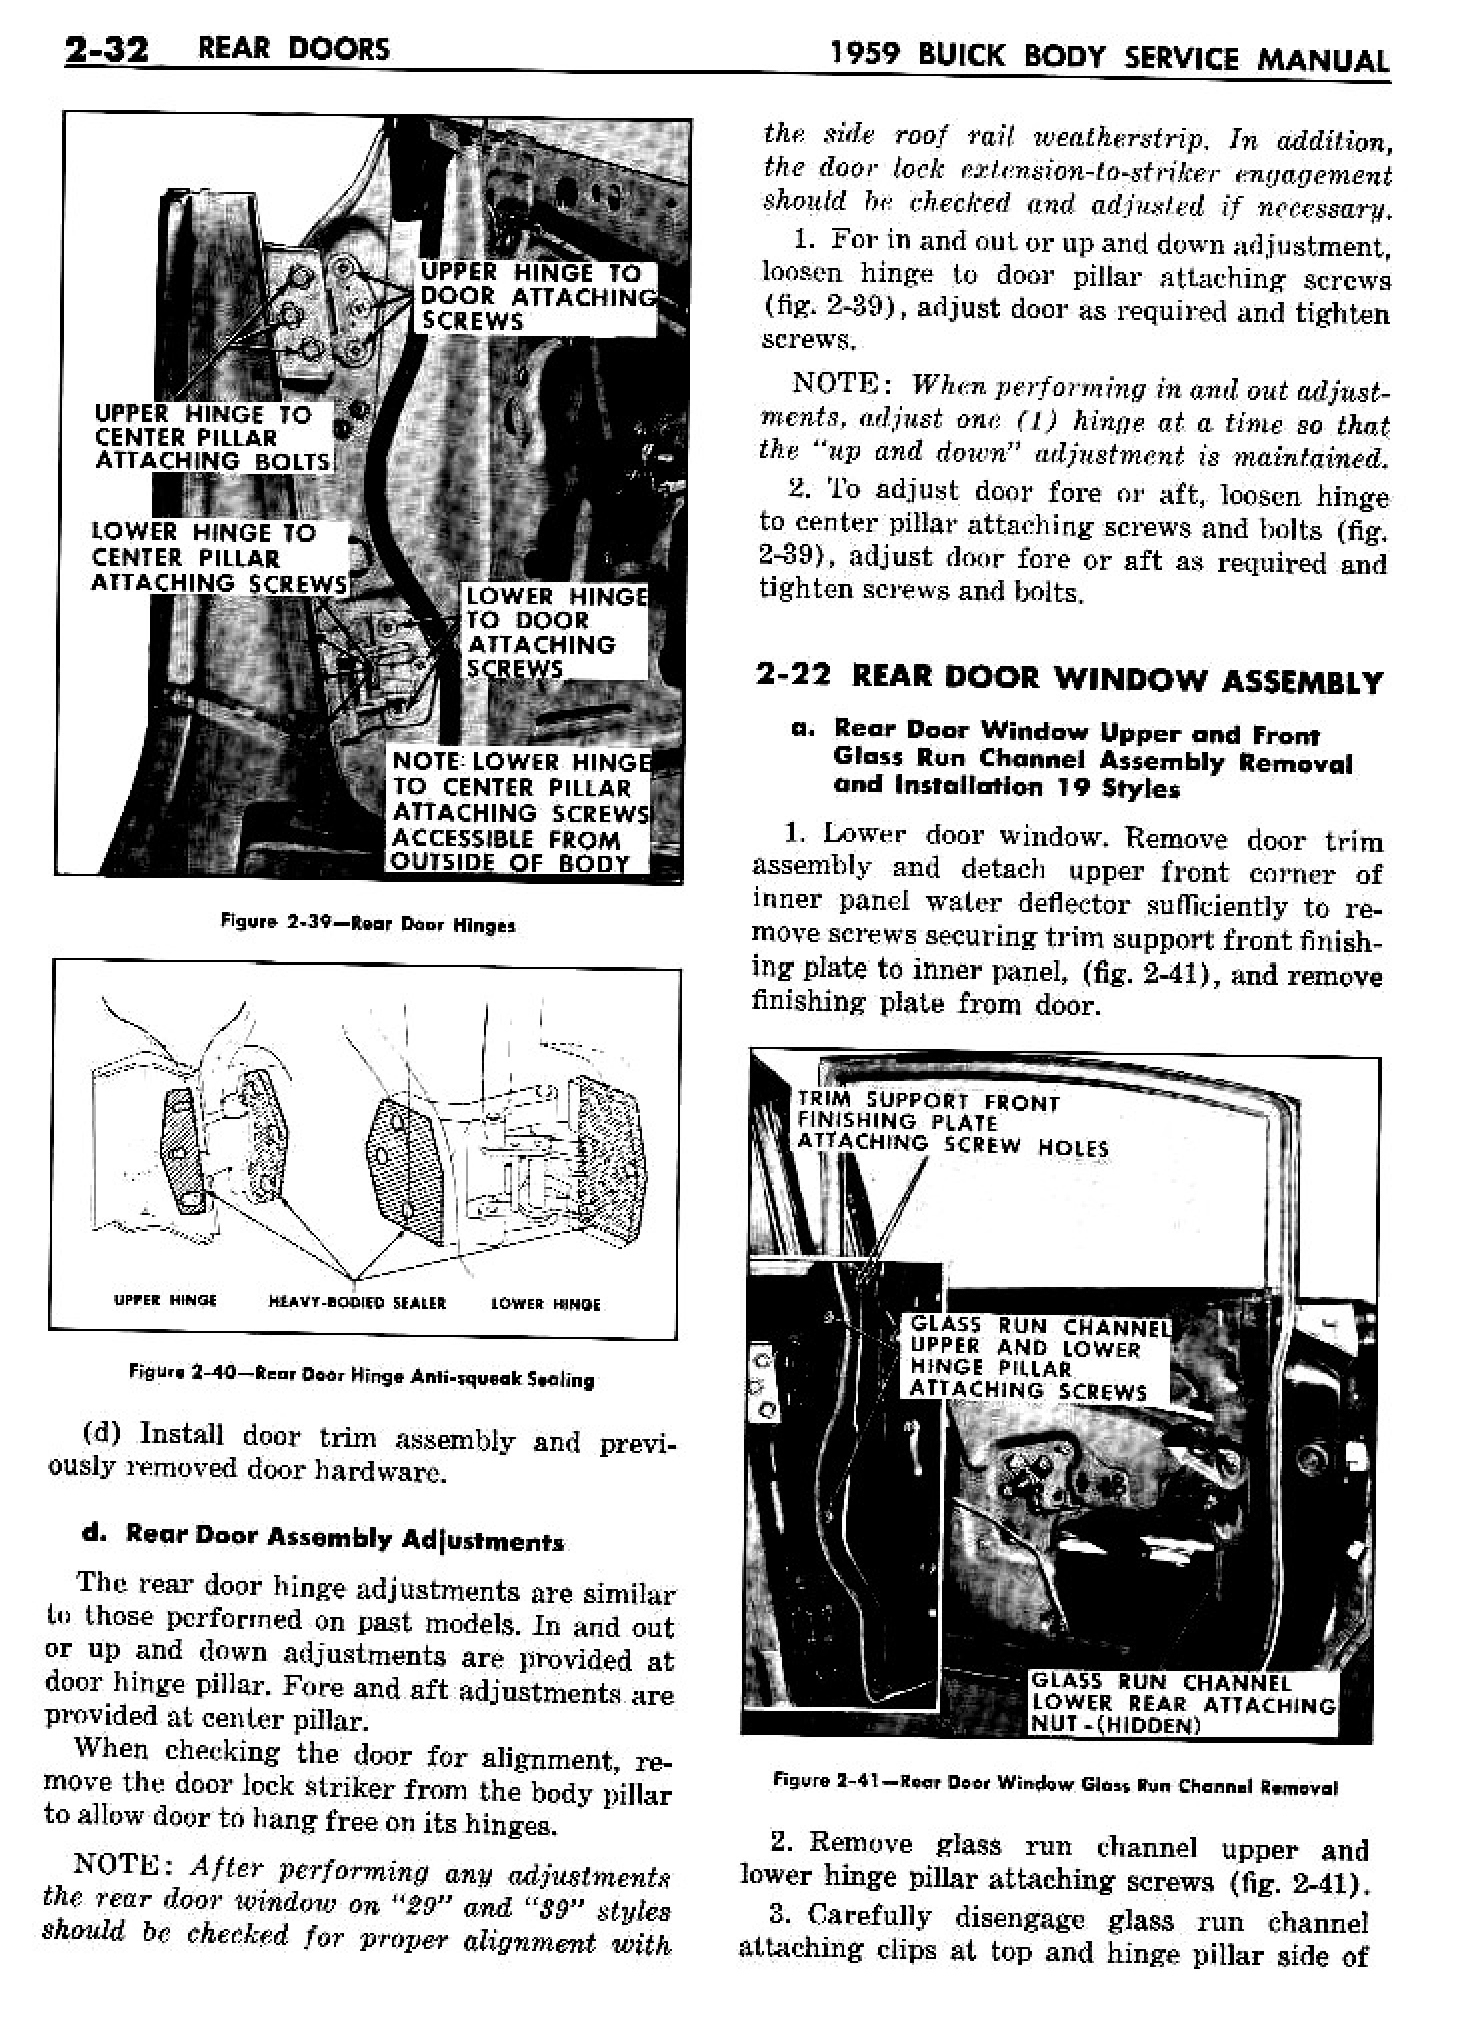 n_03 1959 Buick Body Service-Doors_32.jpg